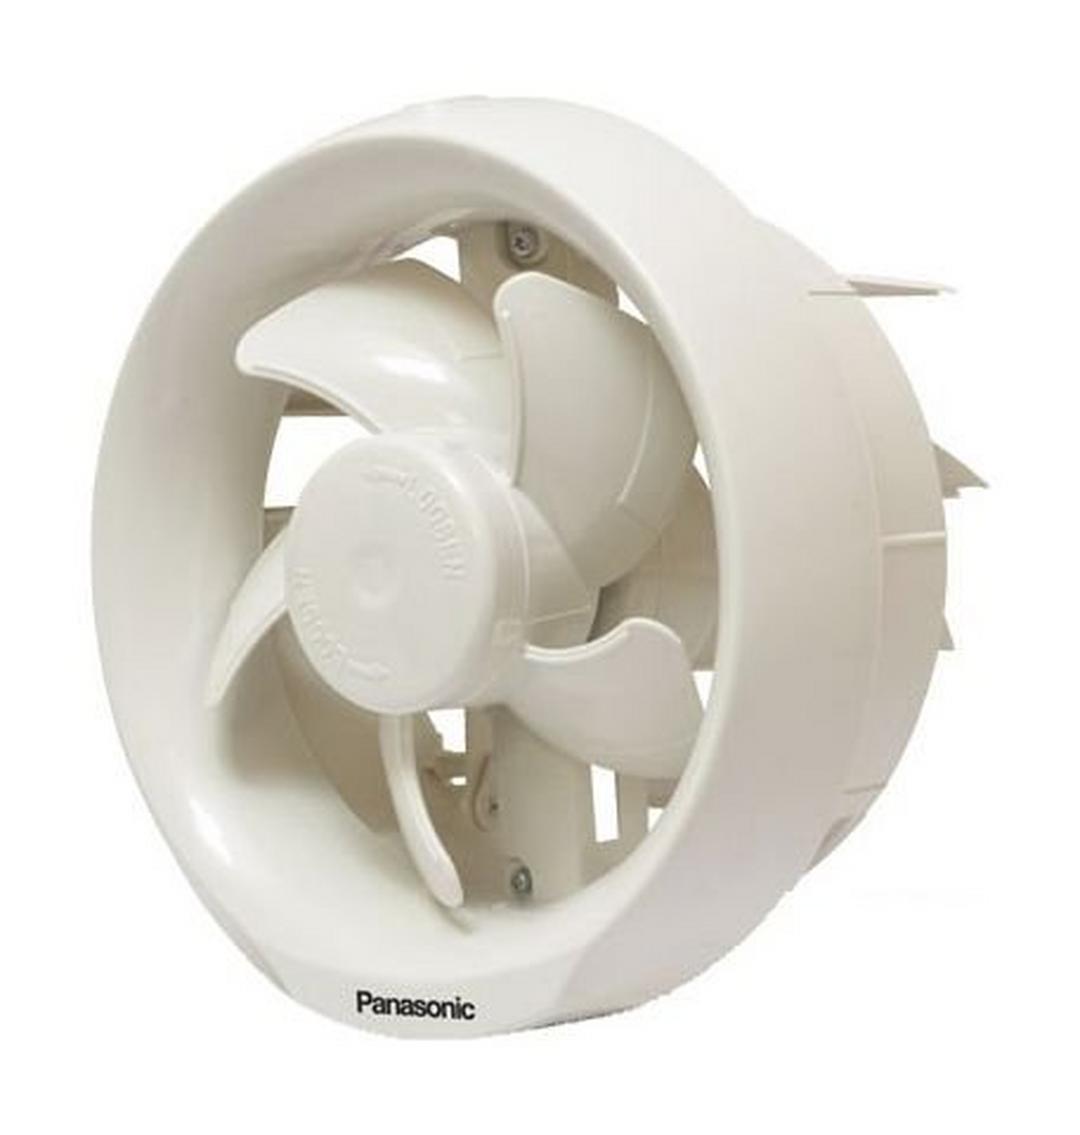 Panasonic 6-inch Window Mount Ventilator Fan (FV-15WA1NBH) - White